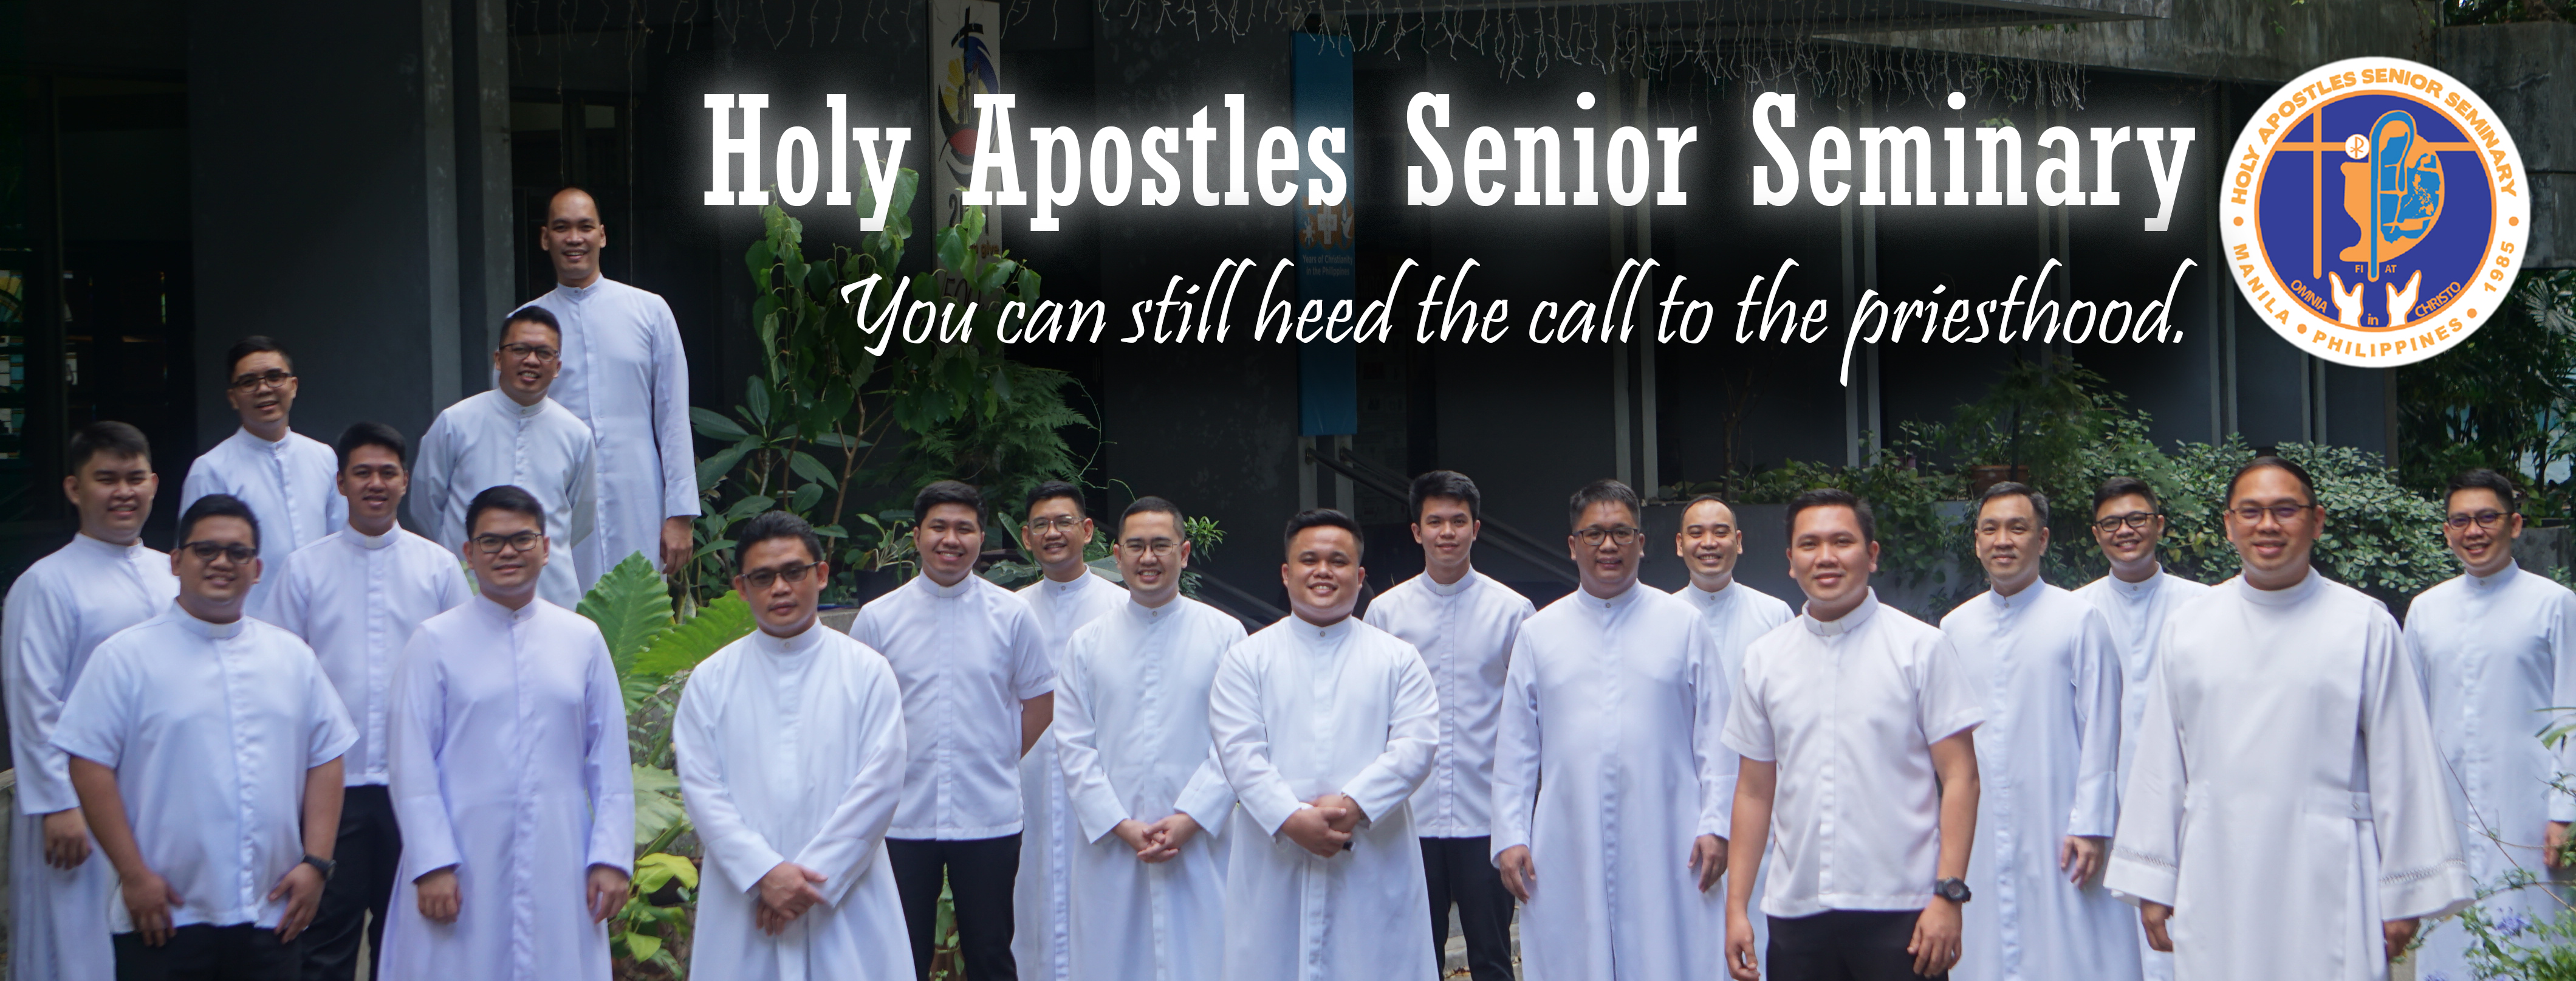 Holy Apostles Senior Seminary